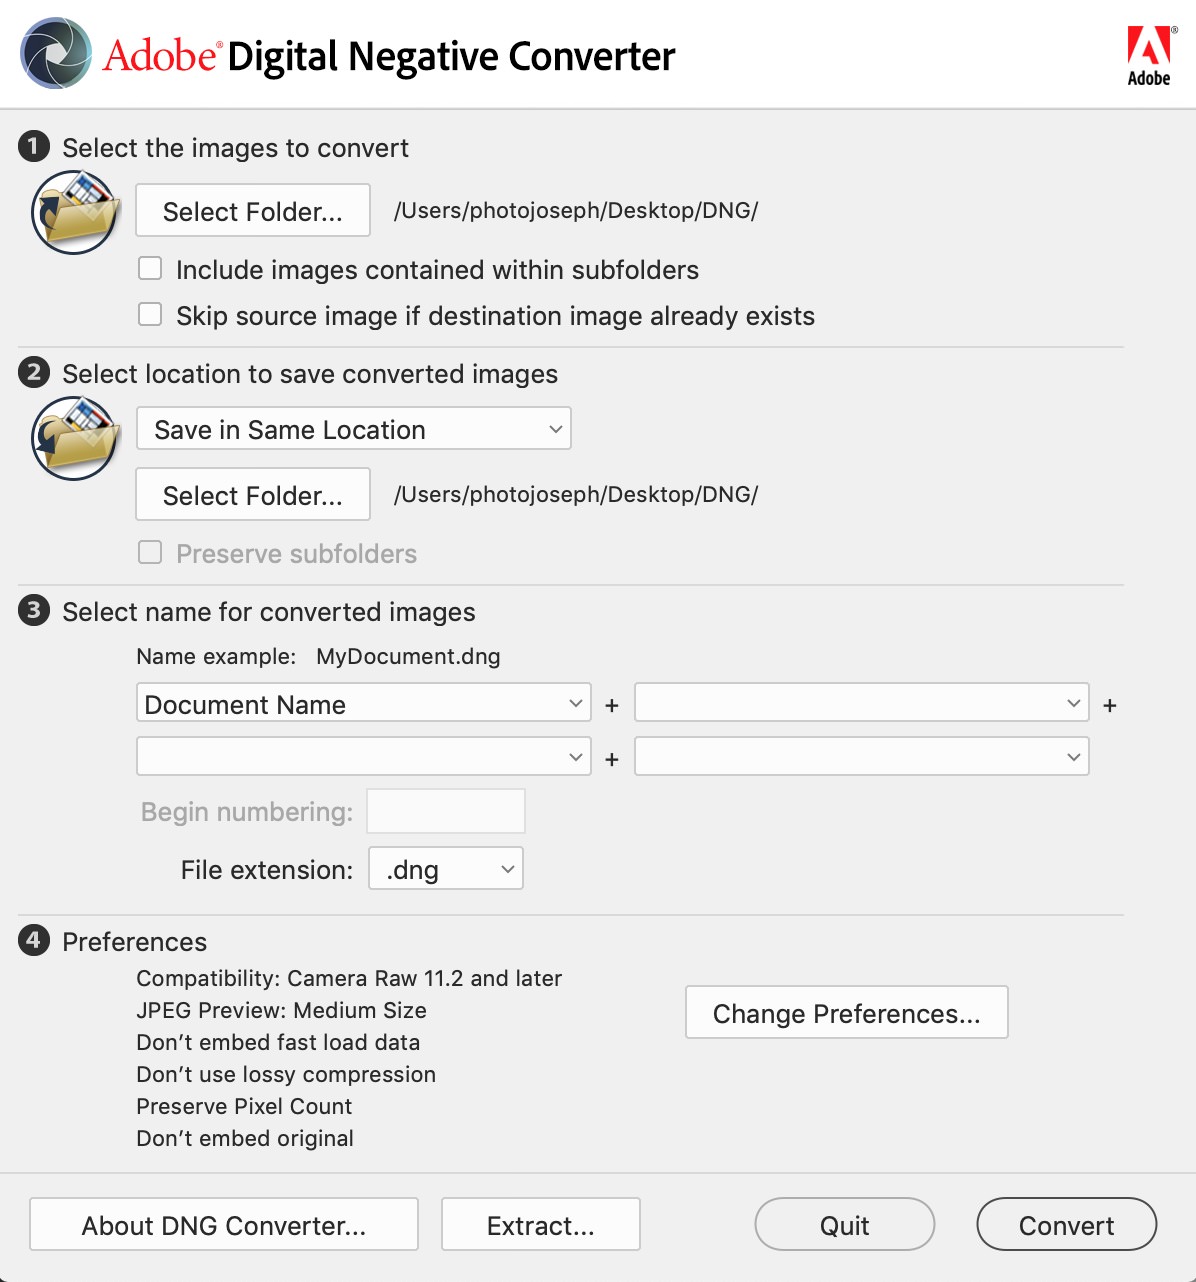 The Adobe DNG (Digital Negative) Converter app